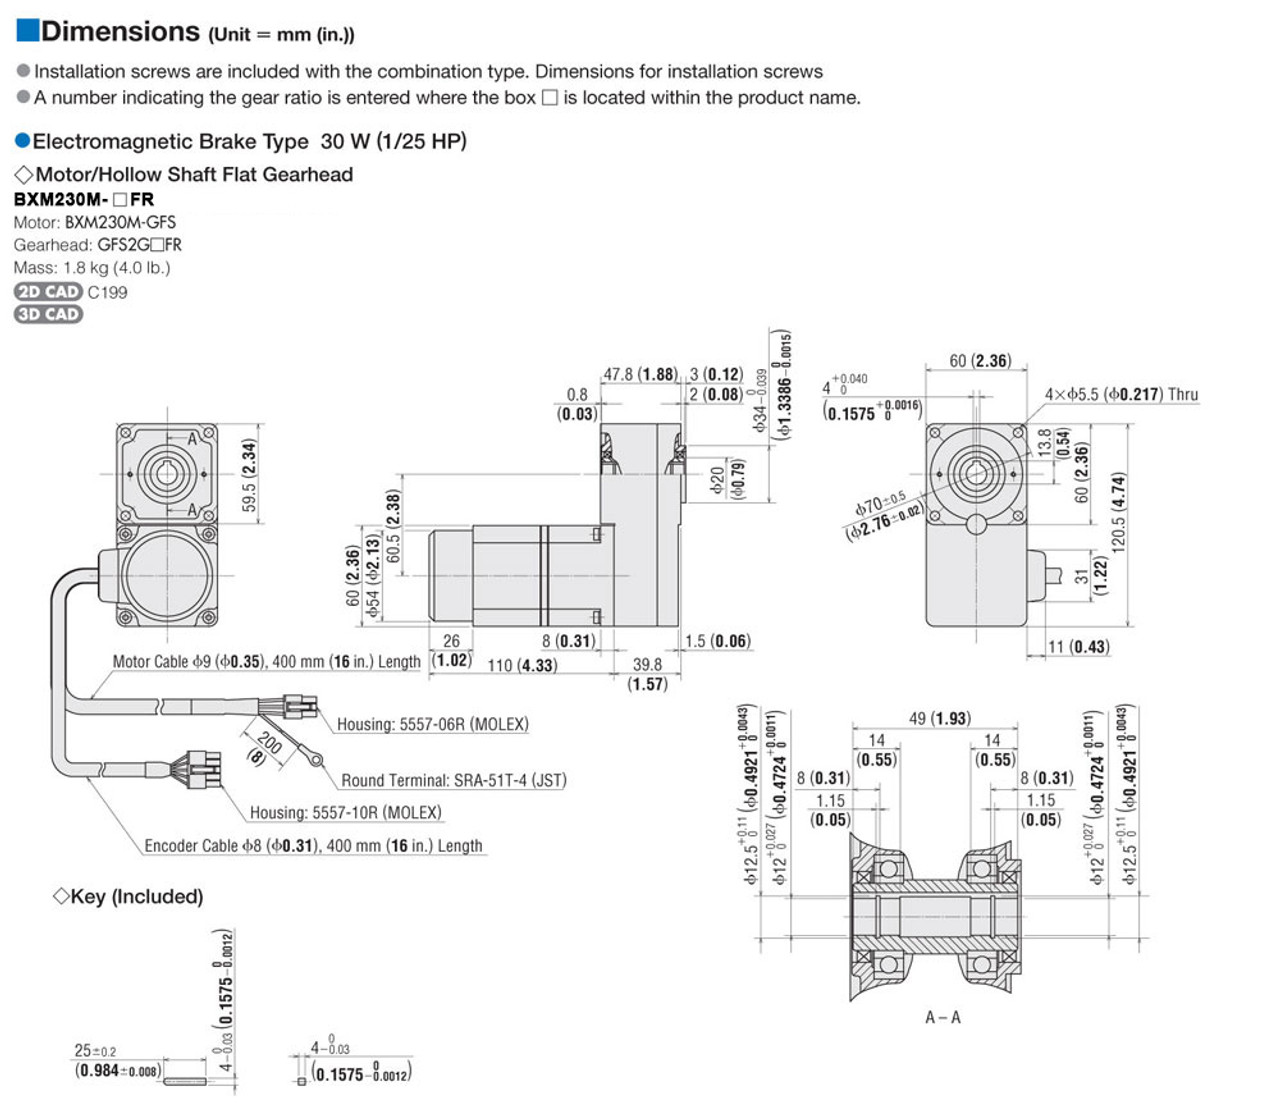 BXM230M-20FR / BXSD30-A2 - Dimensions